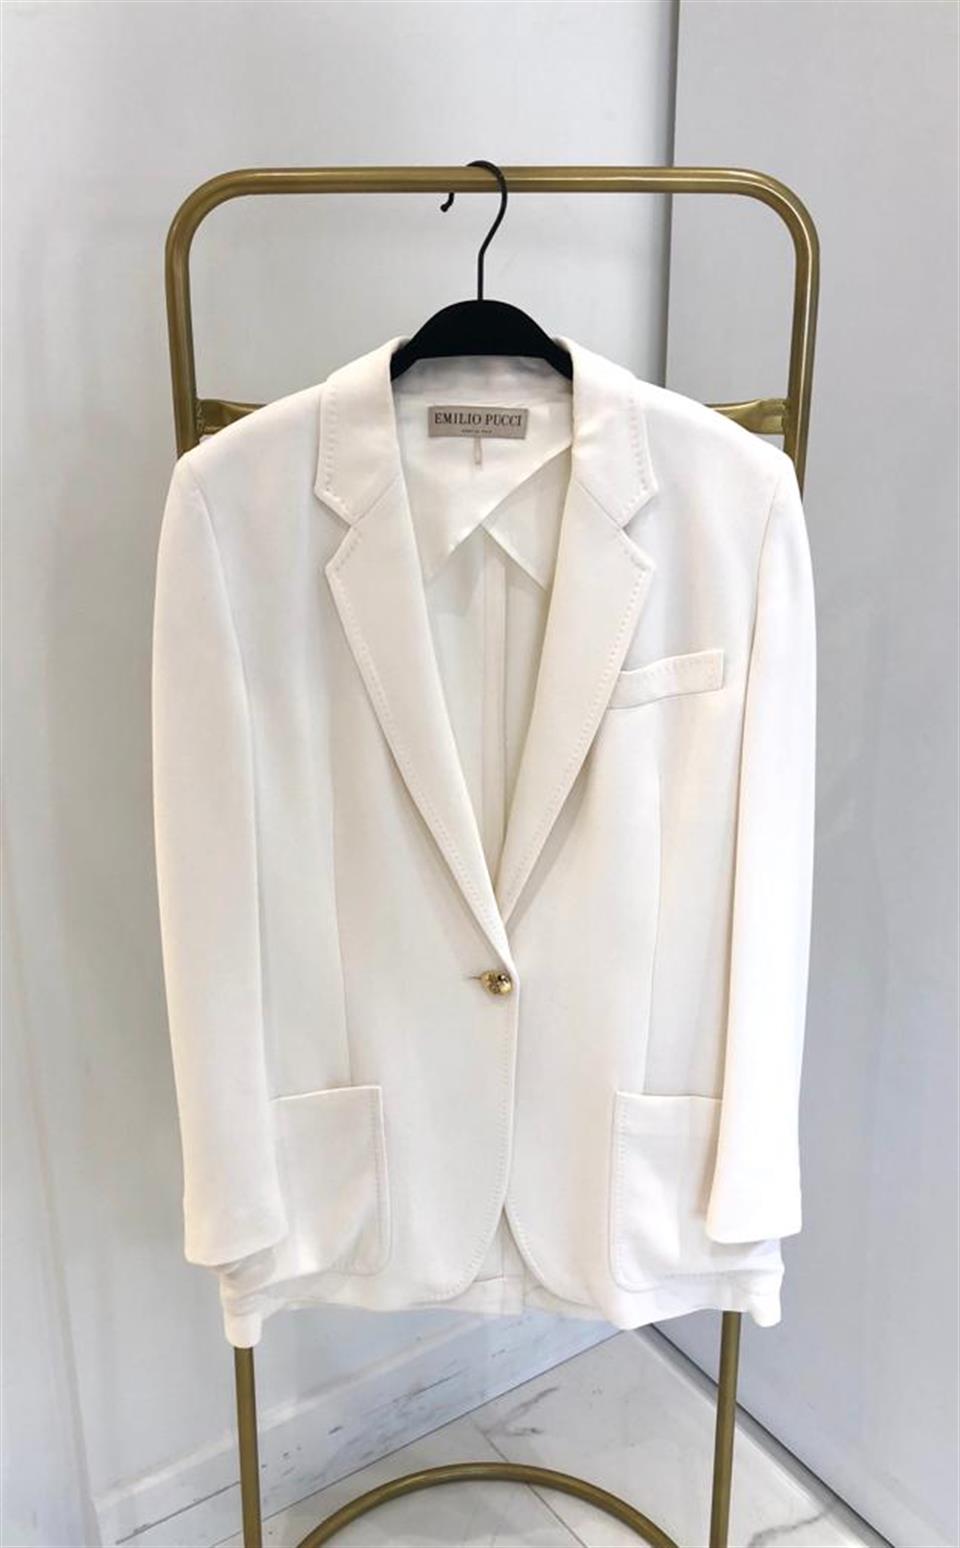 Emilio Pucci Beyaz Blazer Ceket 36 Deluxe Seconds'ta